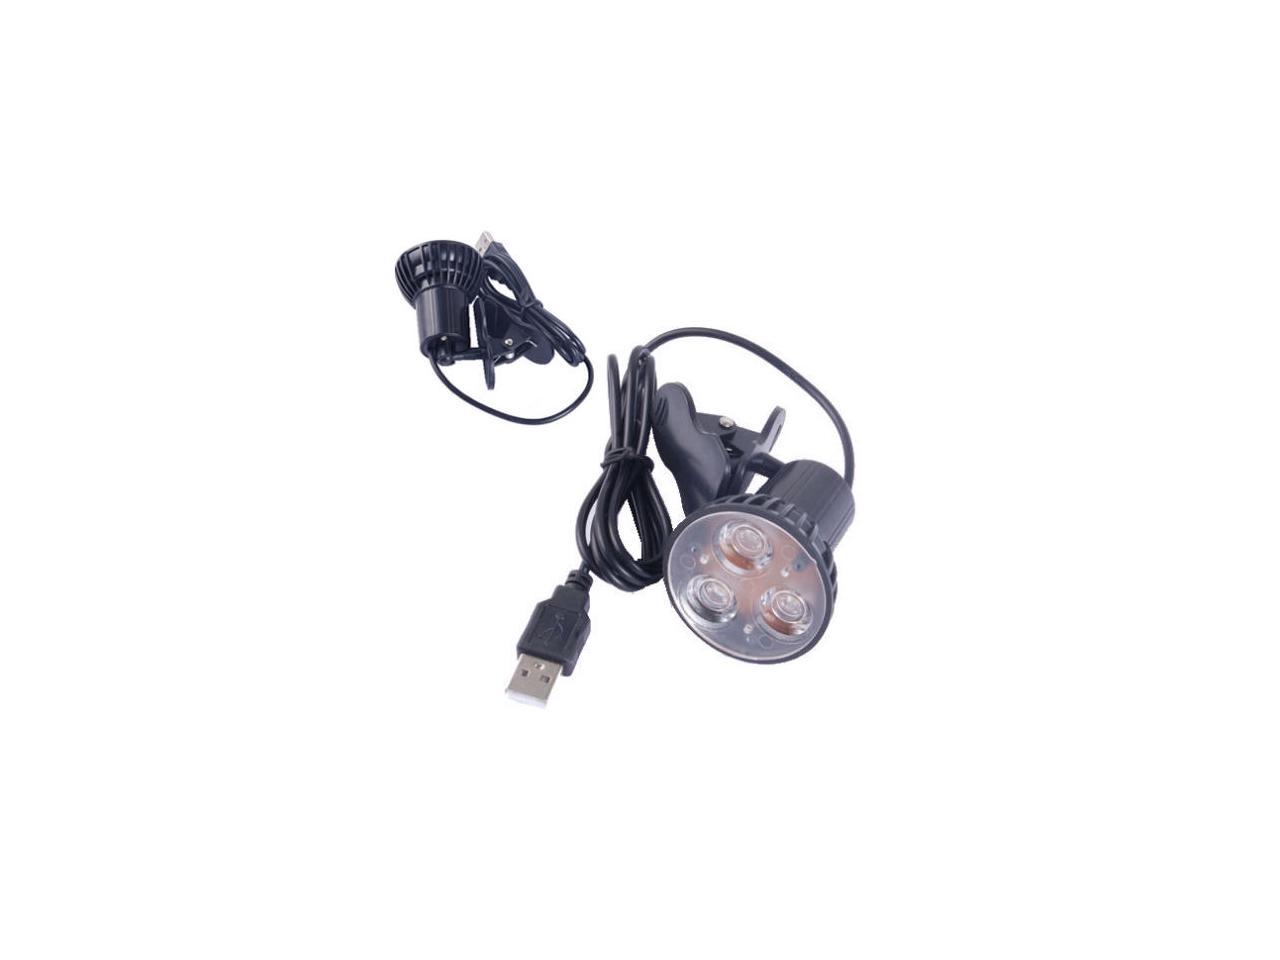 Flexible Super Bright 3 LED Clip On Spot USB Light Lamp For Laptop PC Notebook 